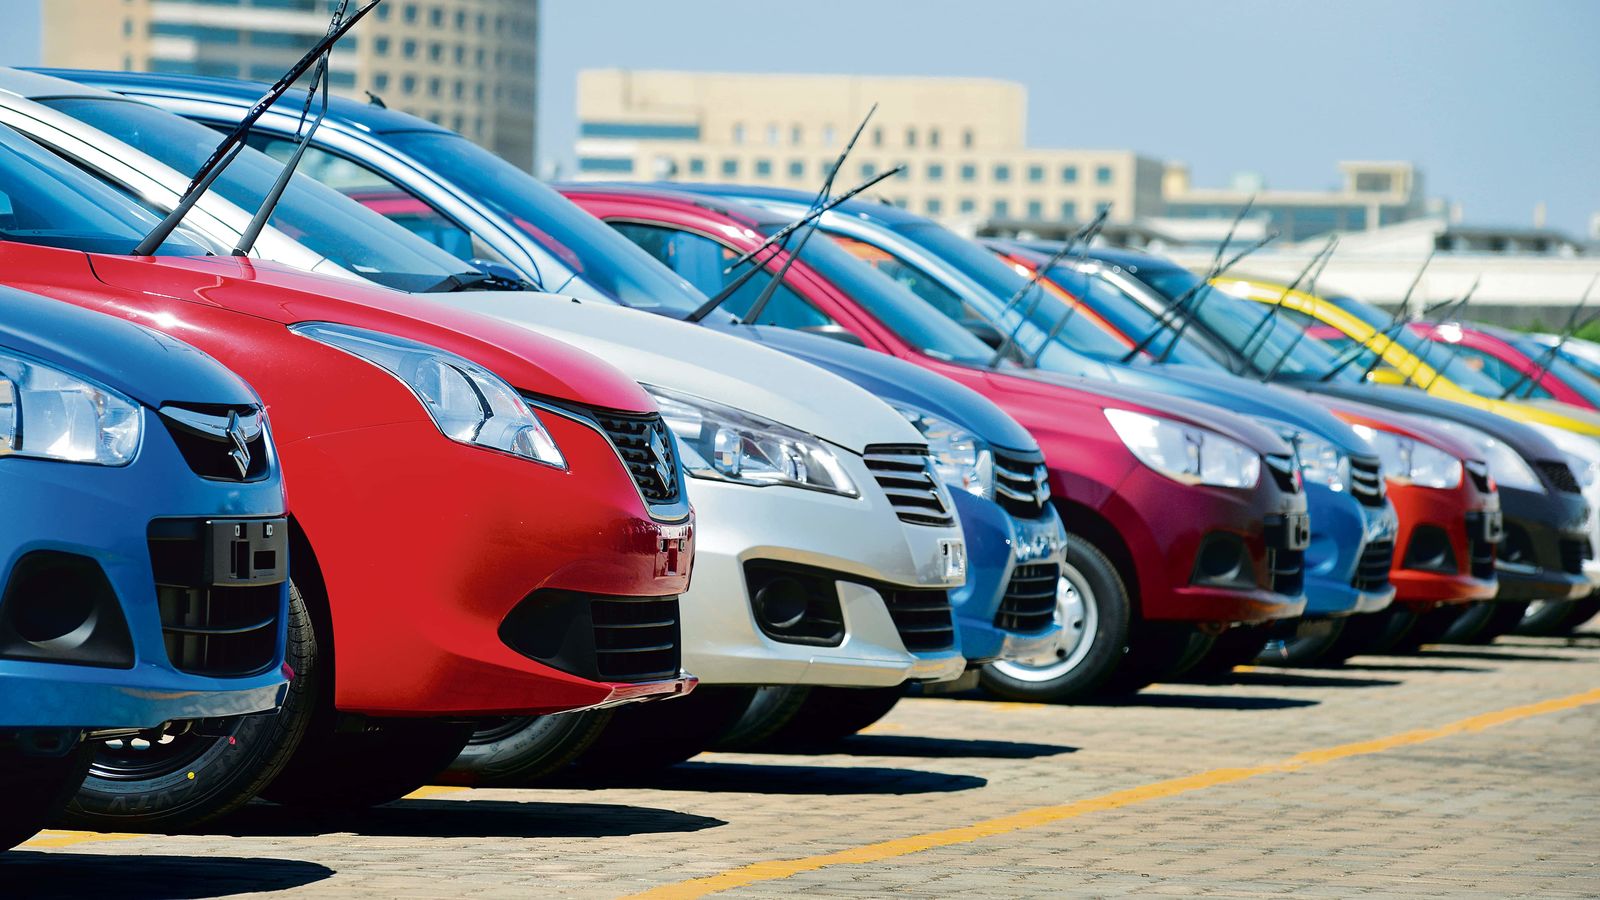 Maruti Suzuki True Value sells four million pre-owned vehicles since  inception | HT Auto